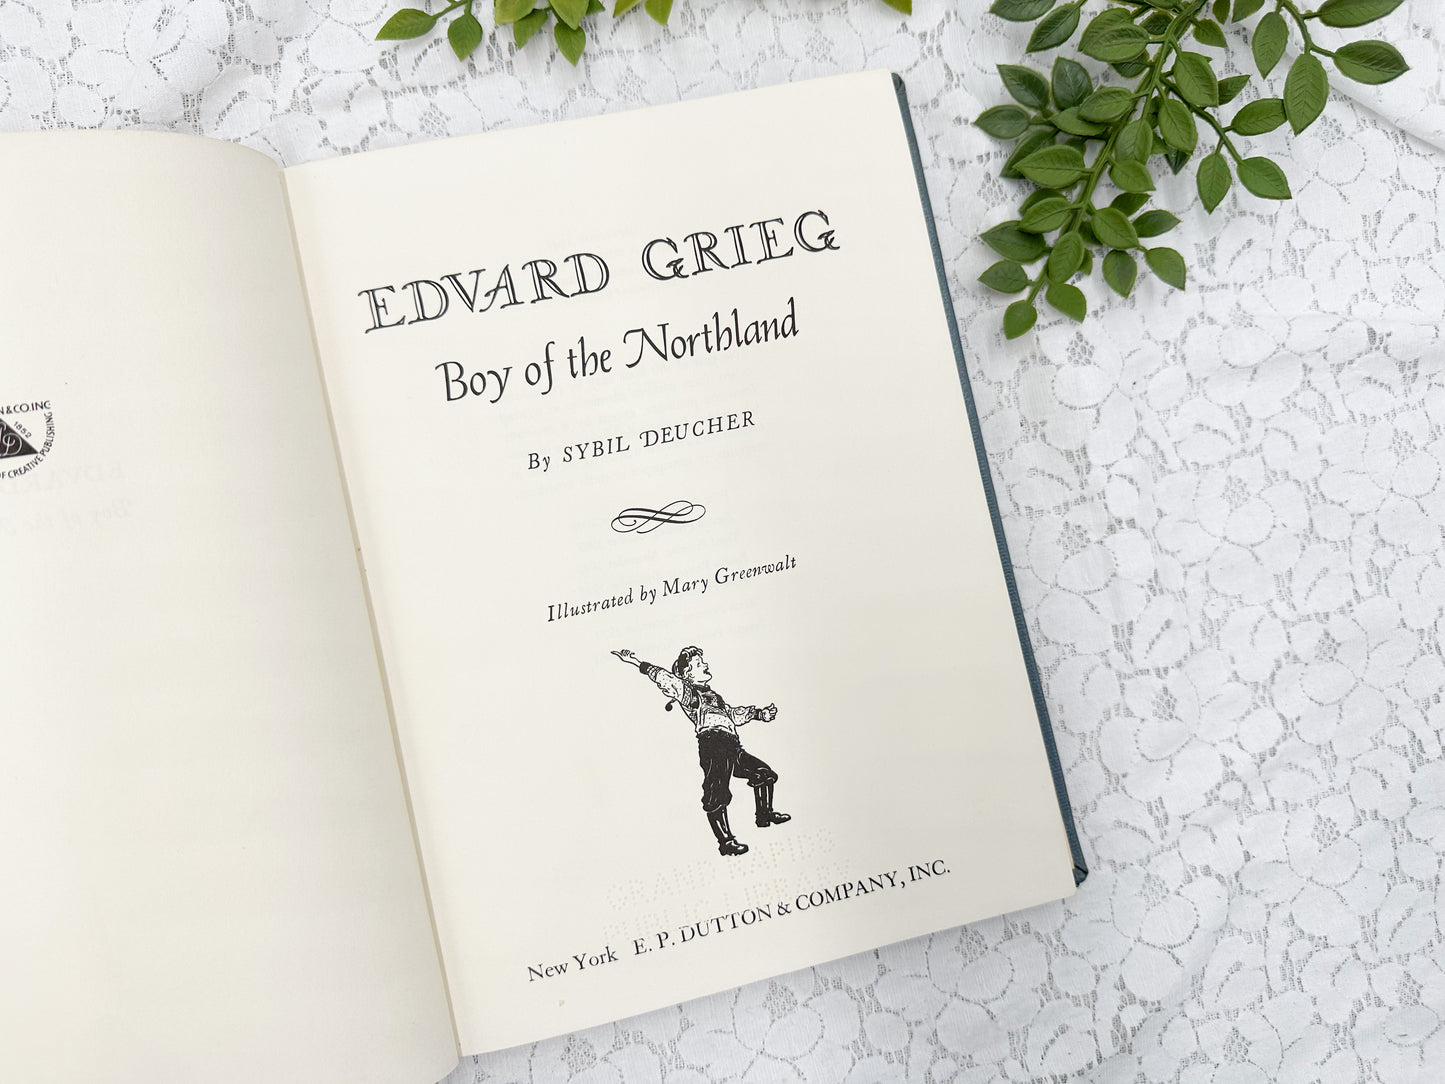 Edvard Grieg Boy of the Northland